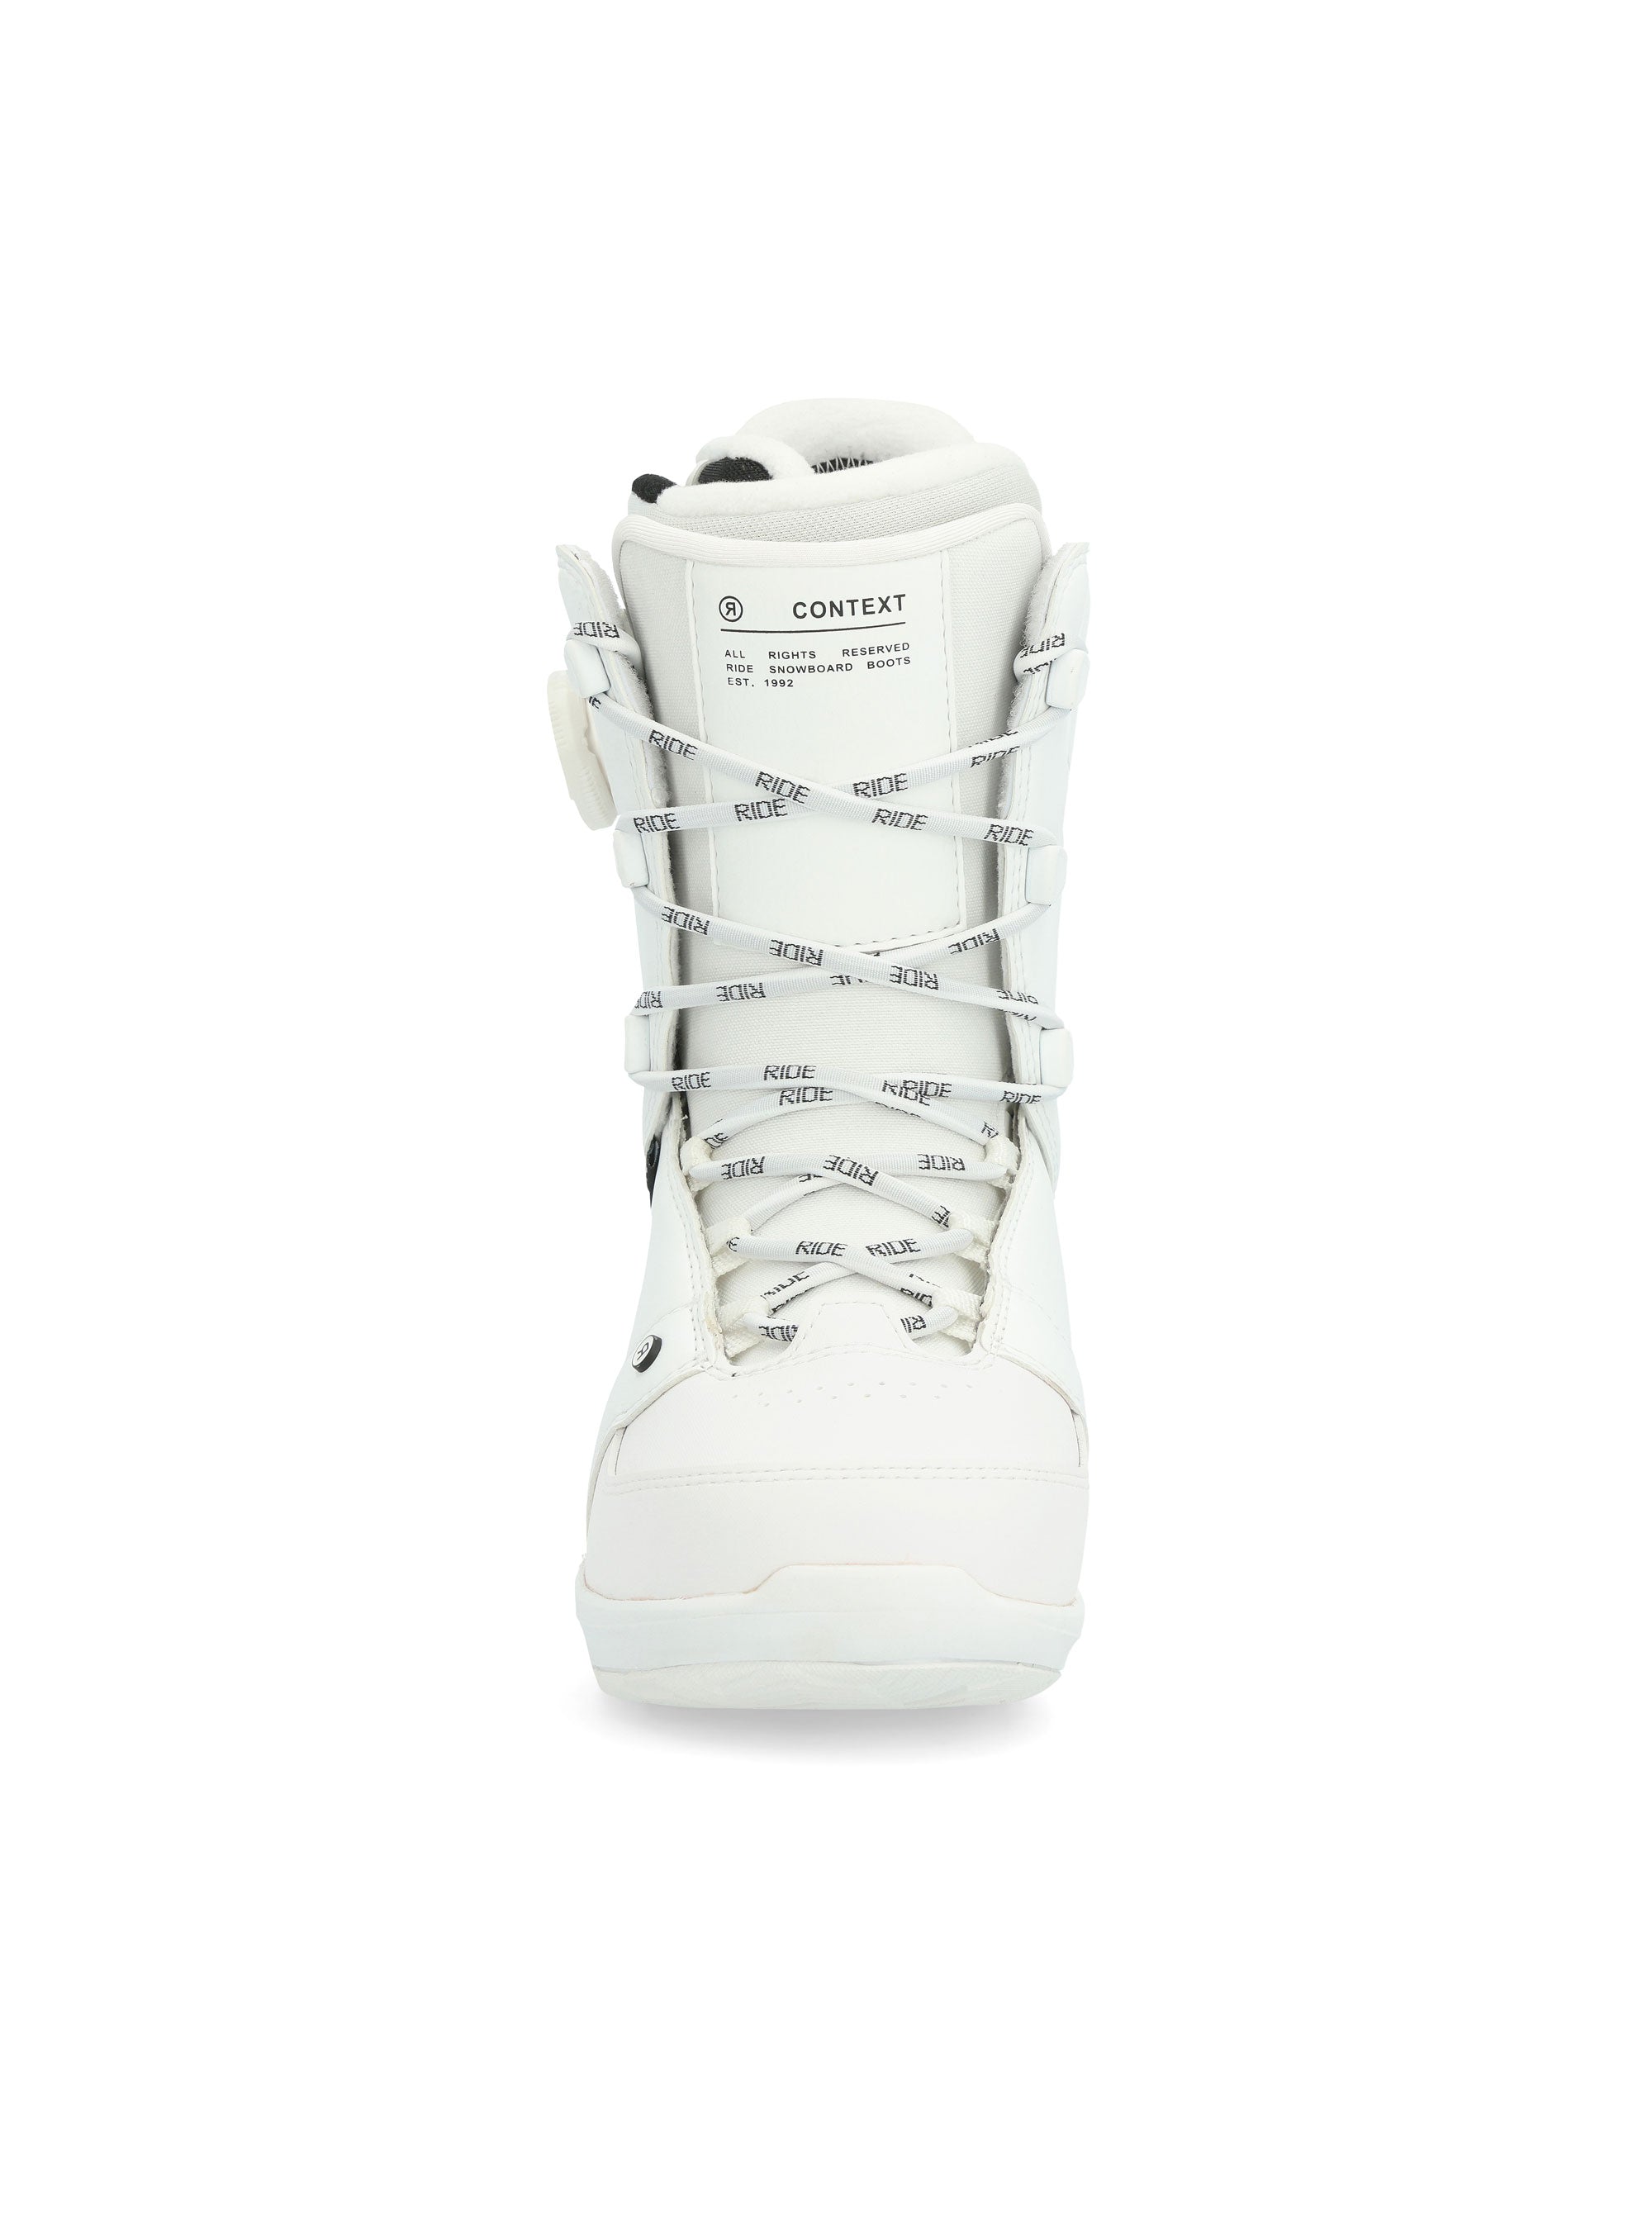 Context Snowboard Boots